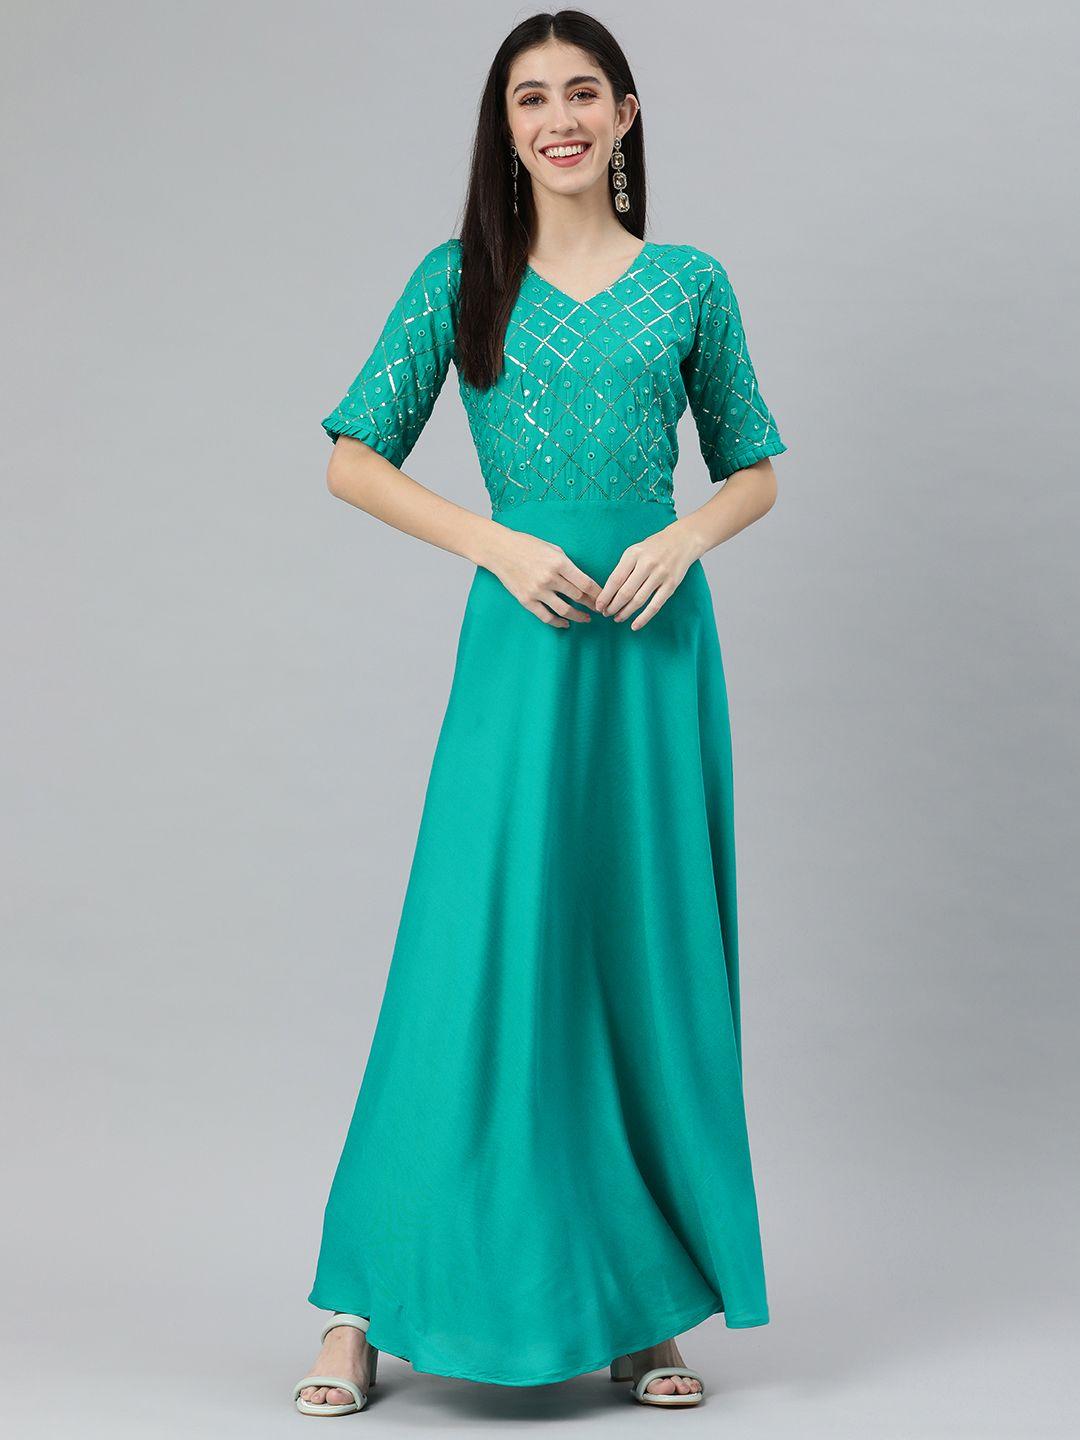 swishchick-women-turquoise-blue-sequined-solid-ethnic-maxi-dress